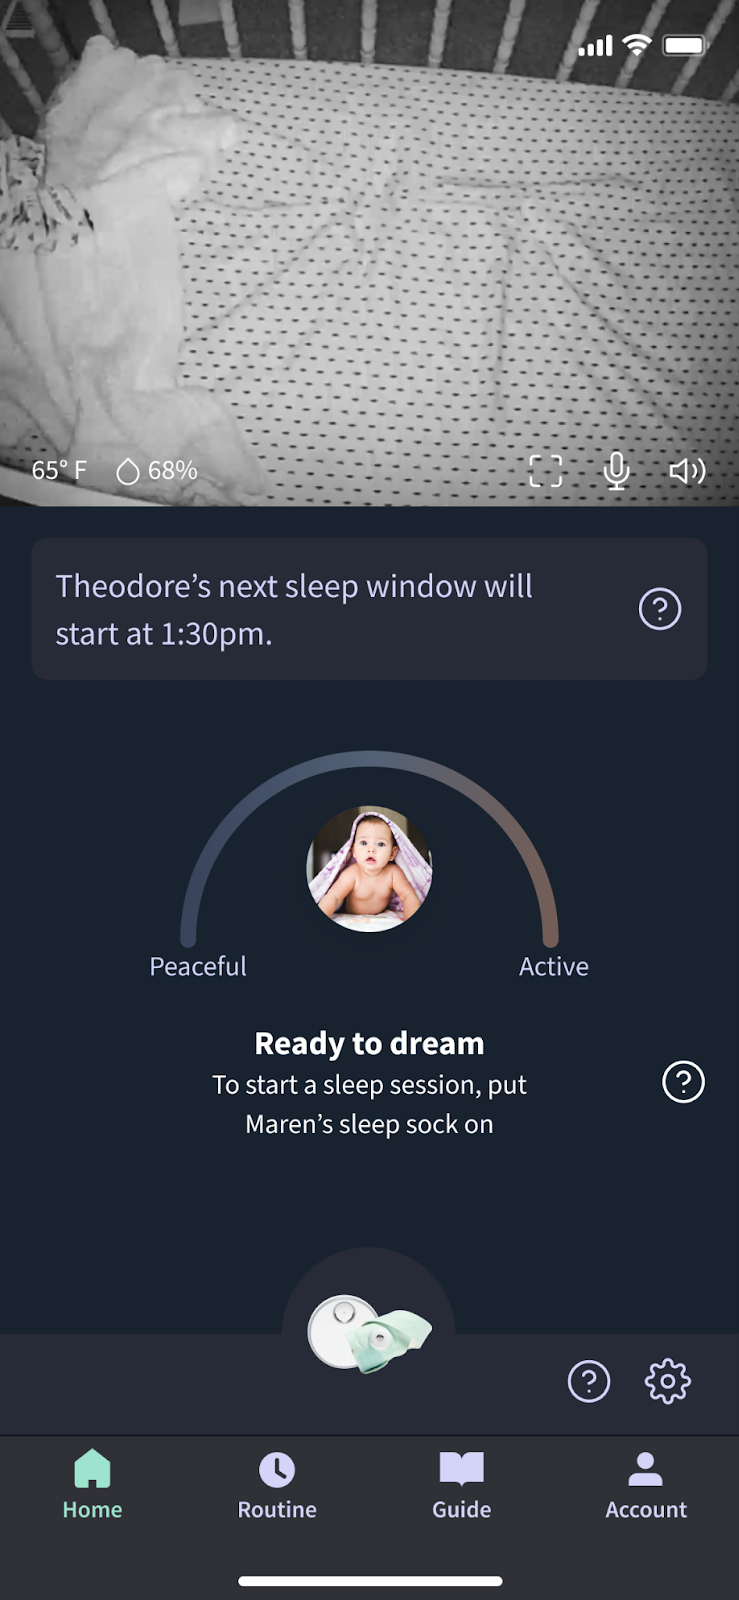 Theodore_s_next_sleep_window_will_2.png